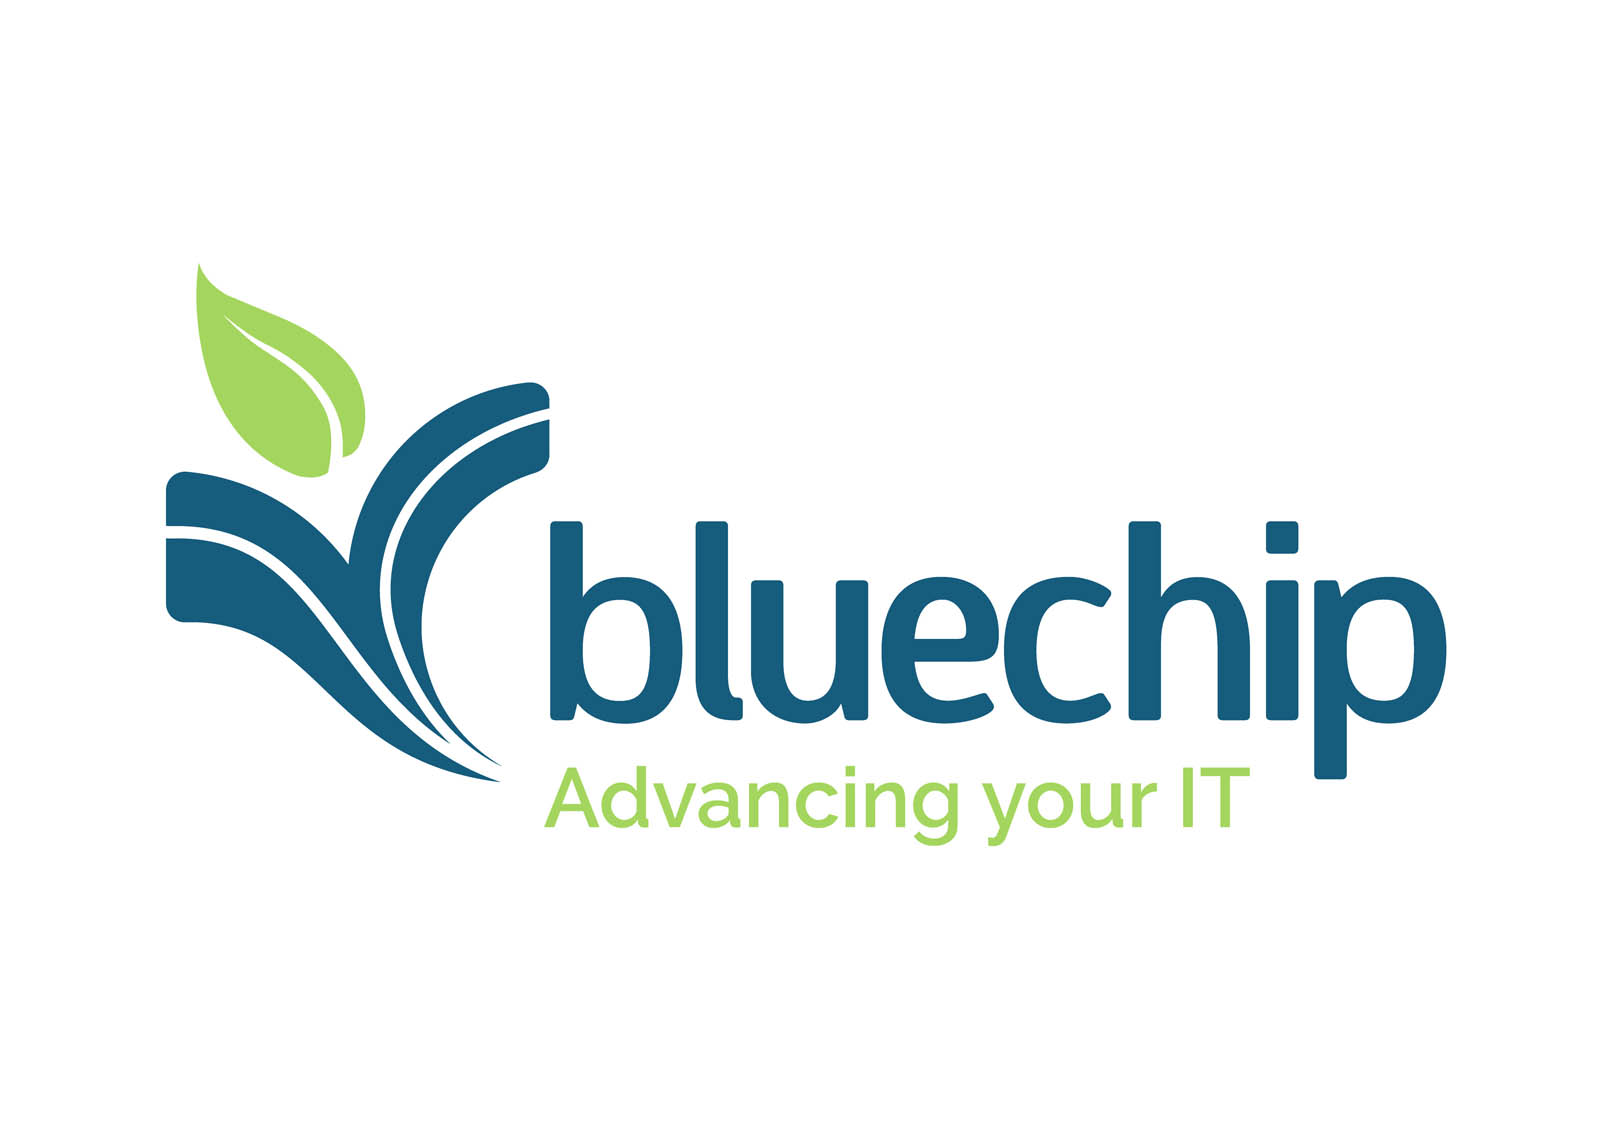 bluechip logo 2019 with strapline